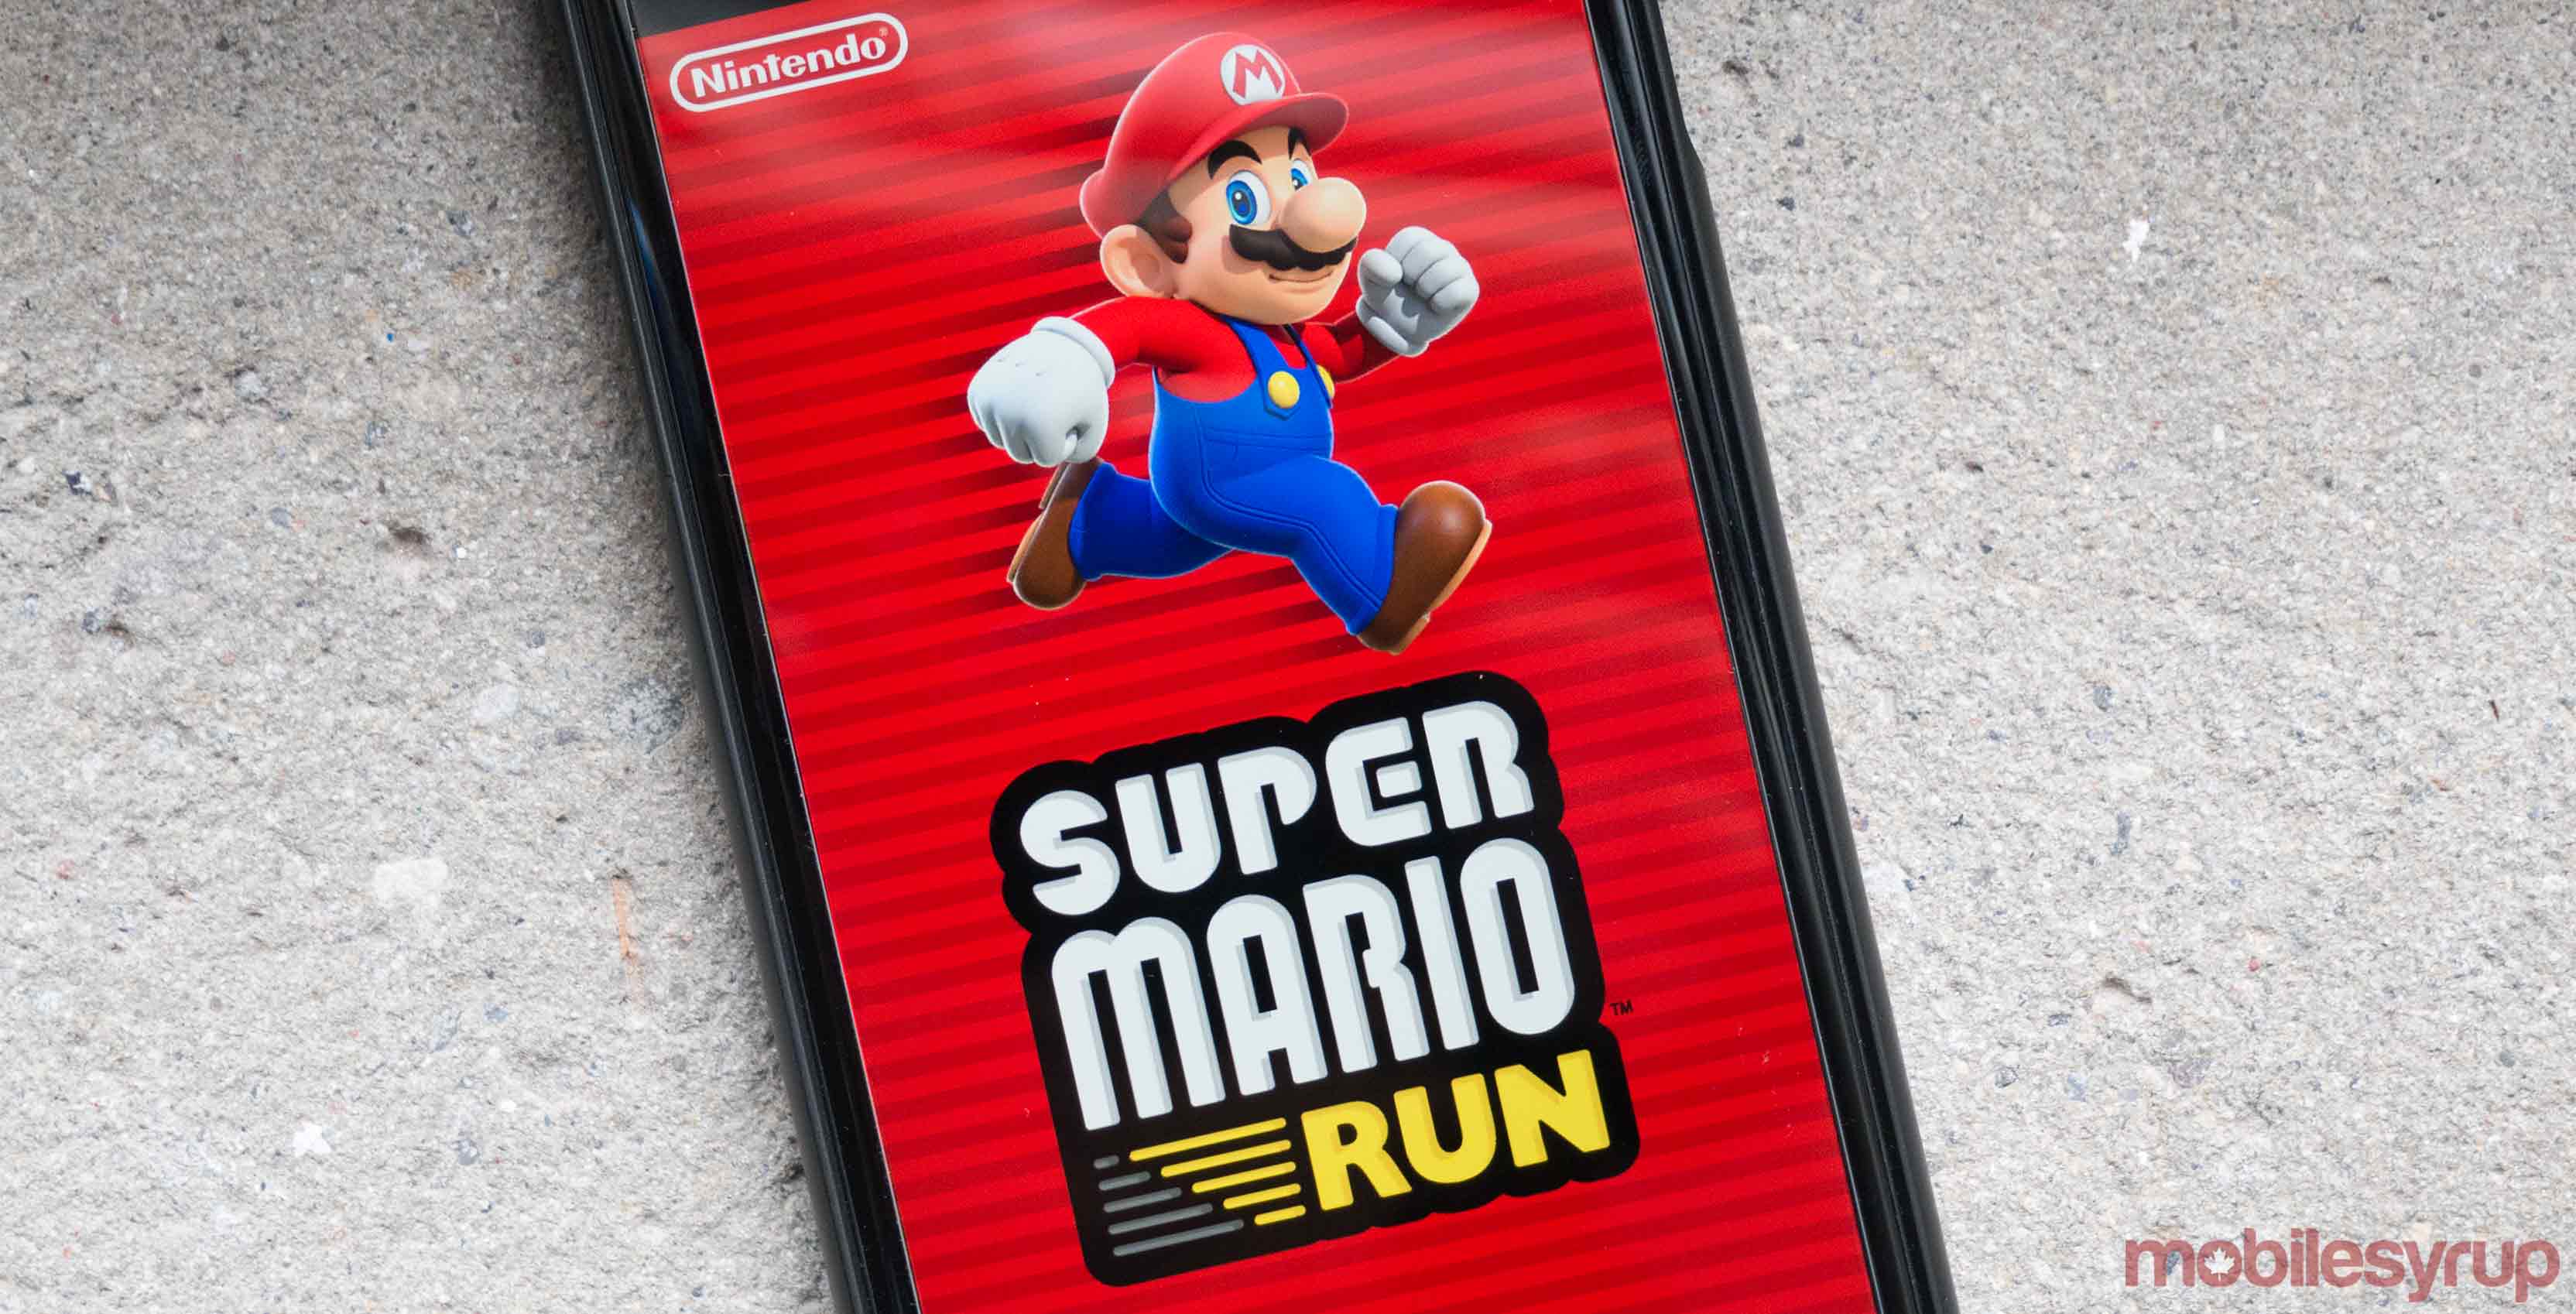 Super Mario Run on smartphone